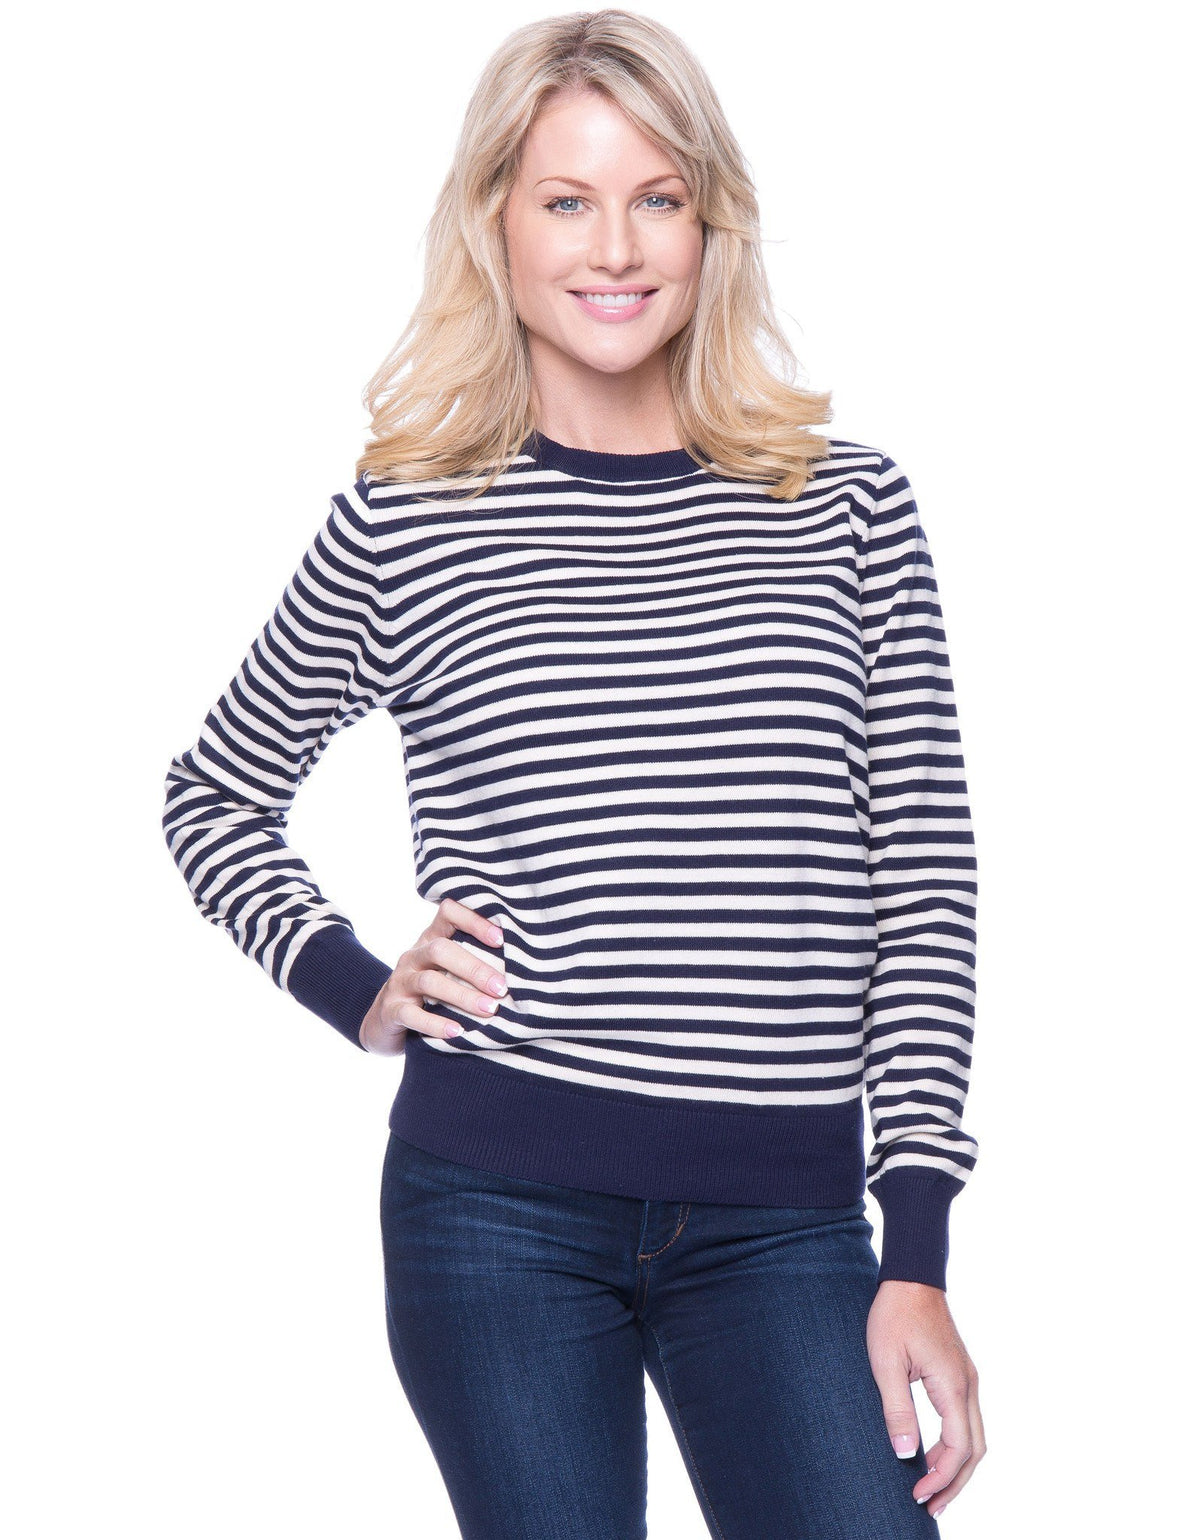 Women's Premium Cotton Crew Neck Sweater - Stripes Navy/Ivory